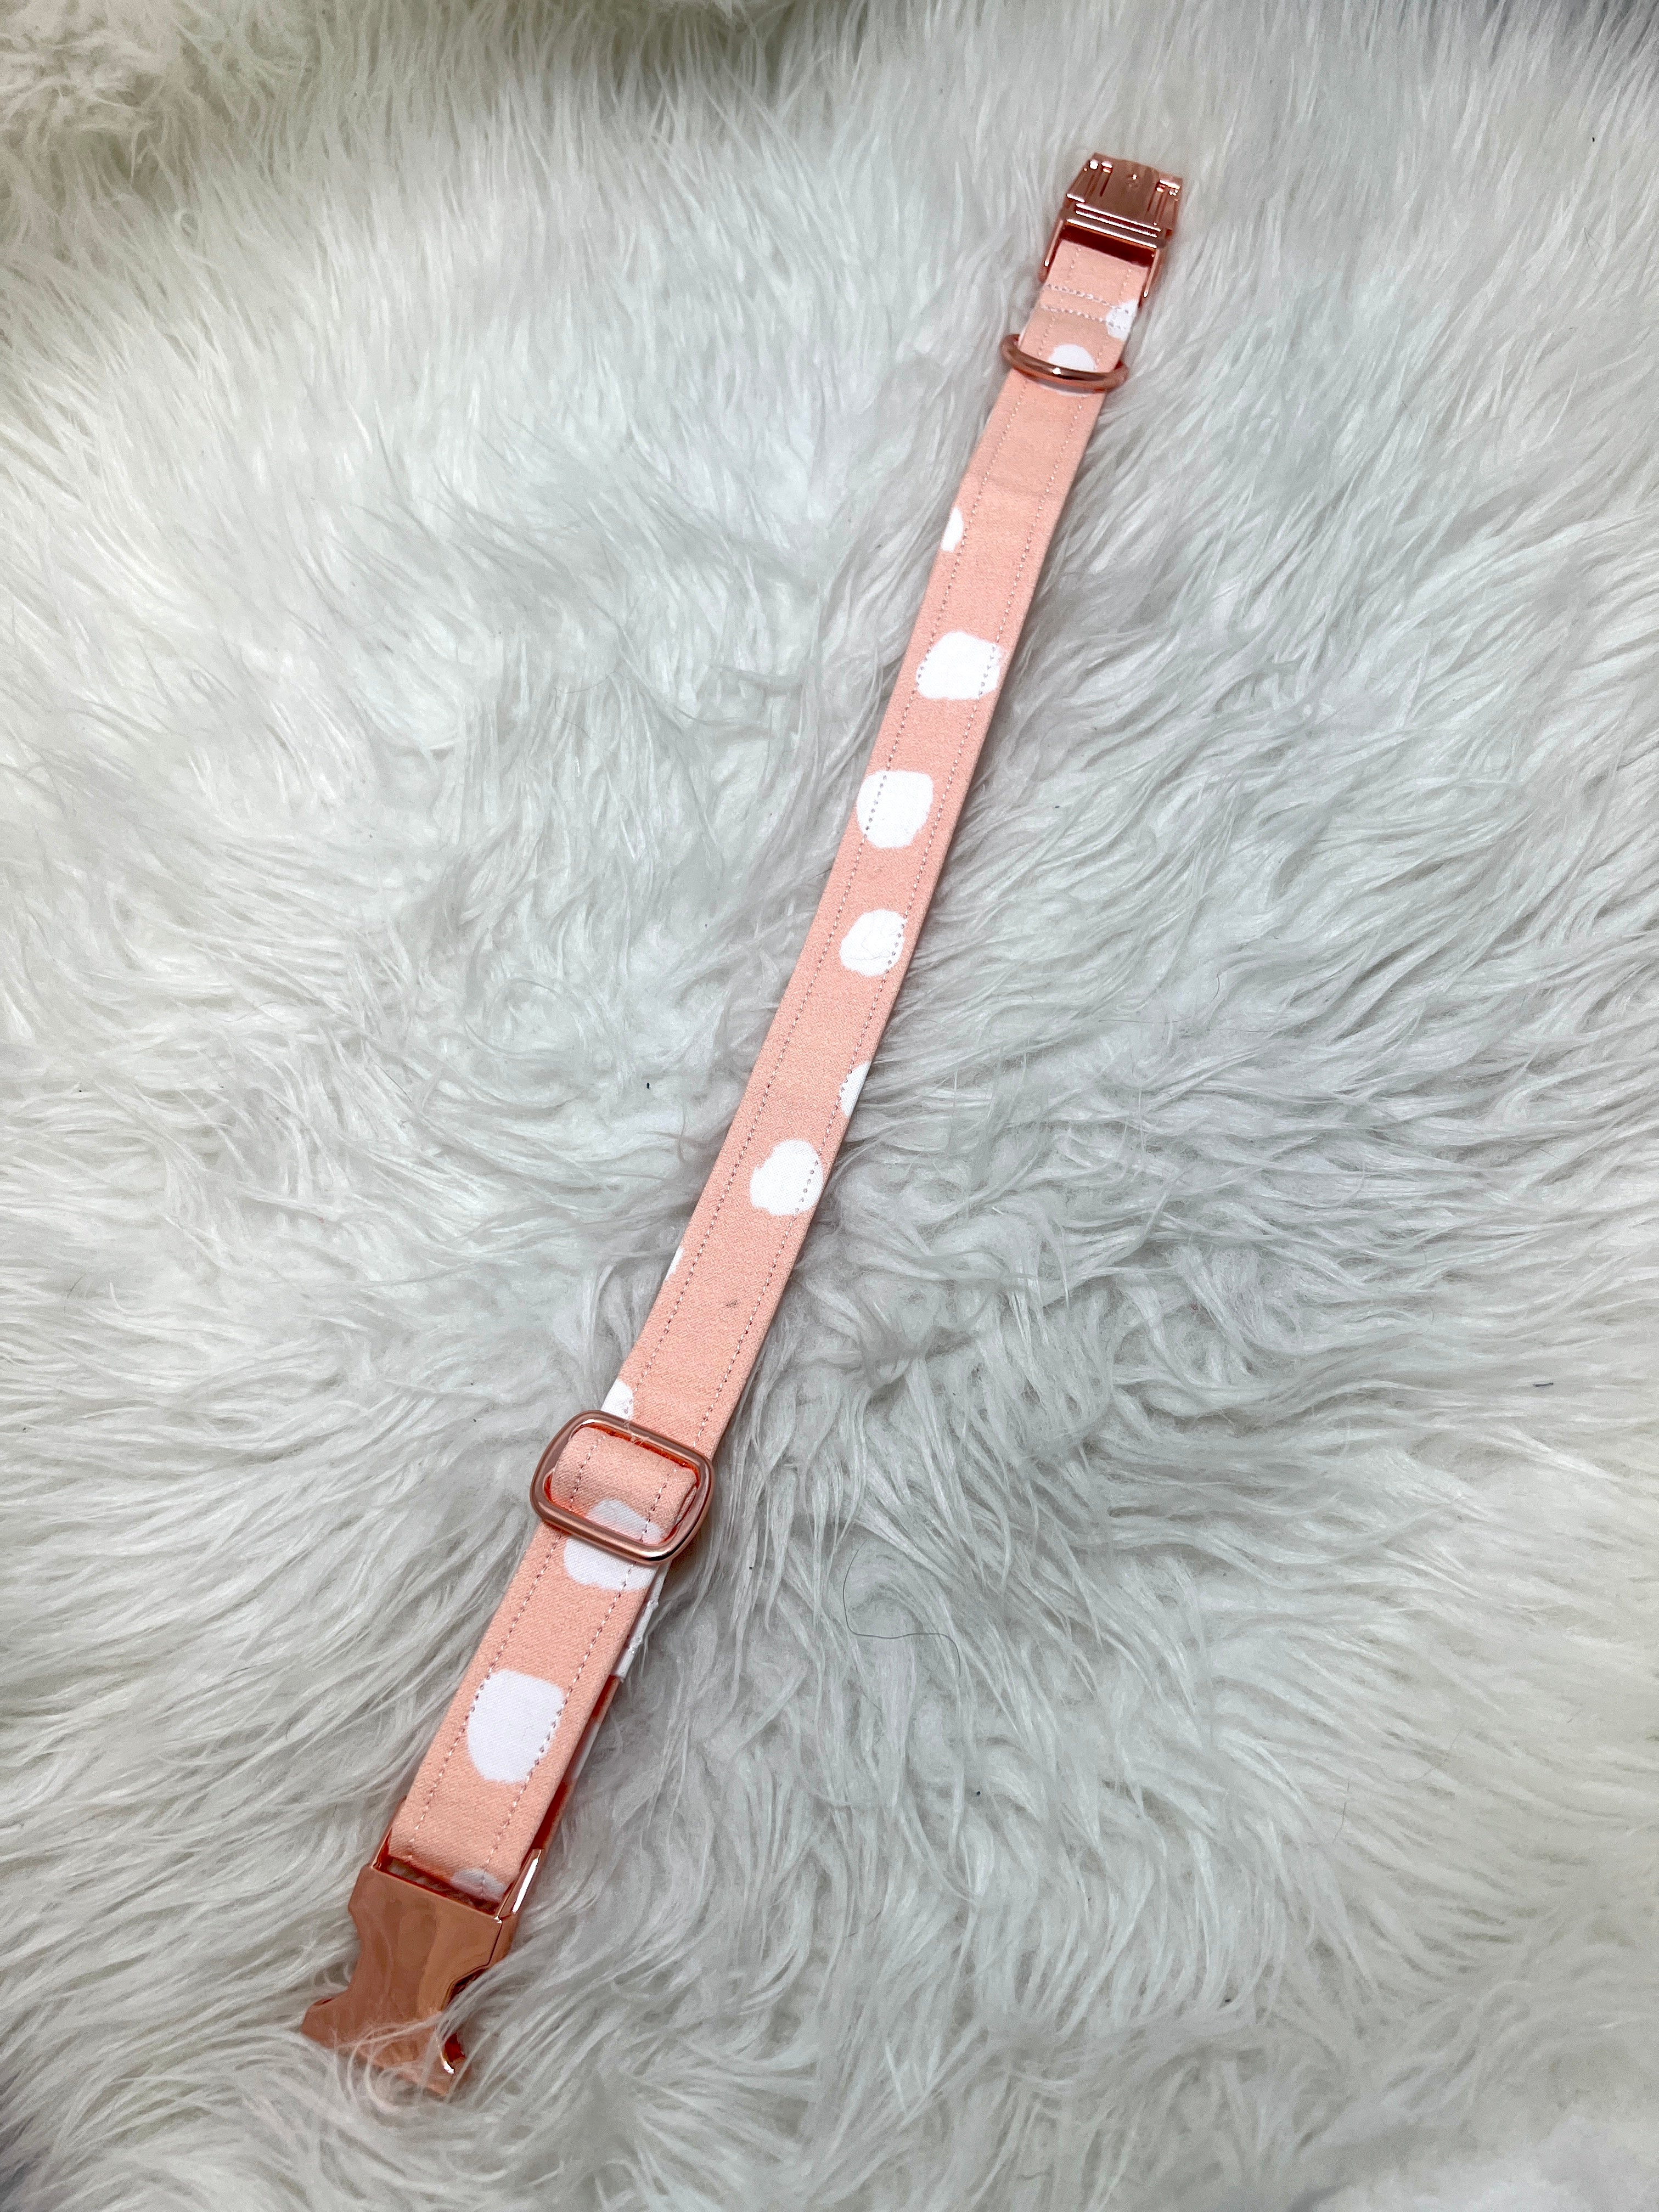 Sweet Peach Fi Compatible Collar